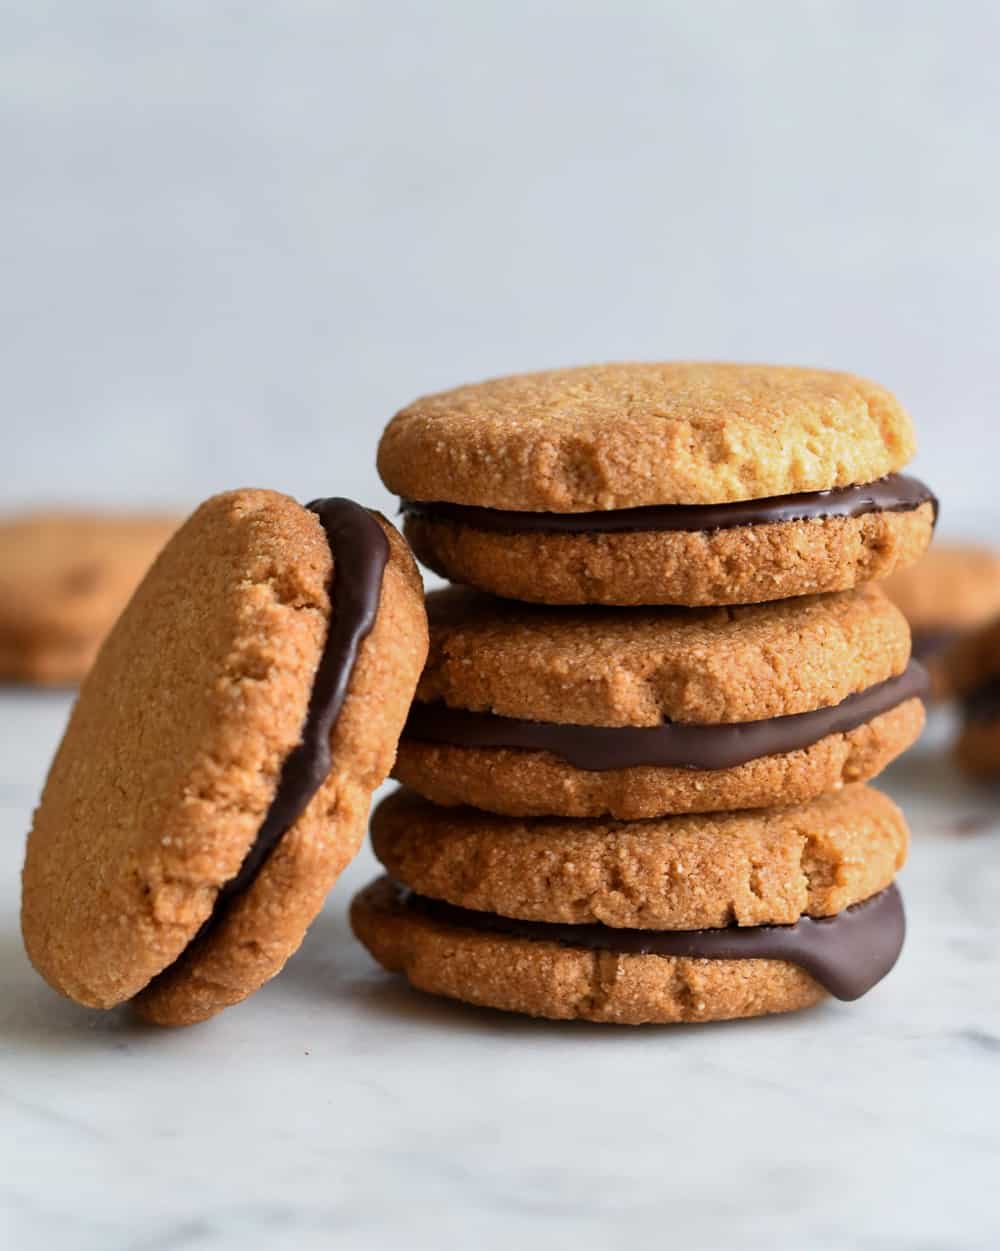 Almond Chocolate Sandwich Cookies leaning cookies